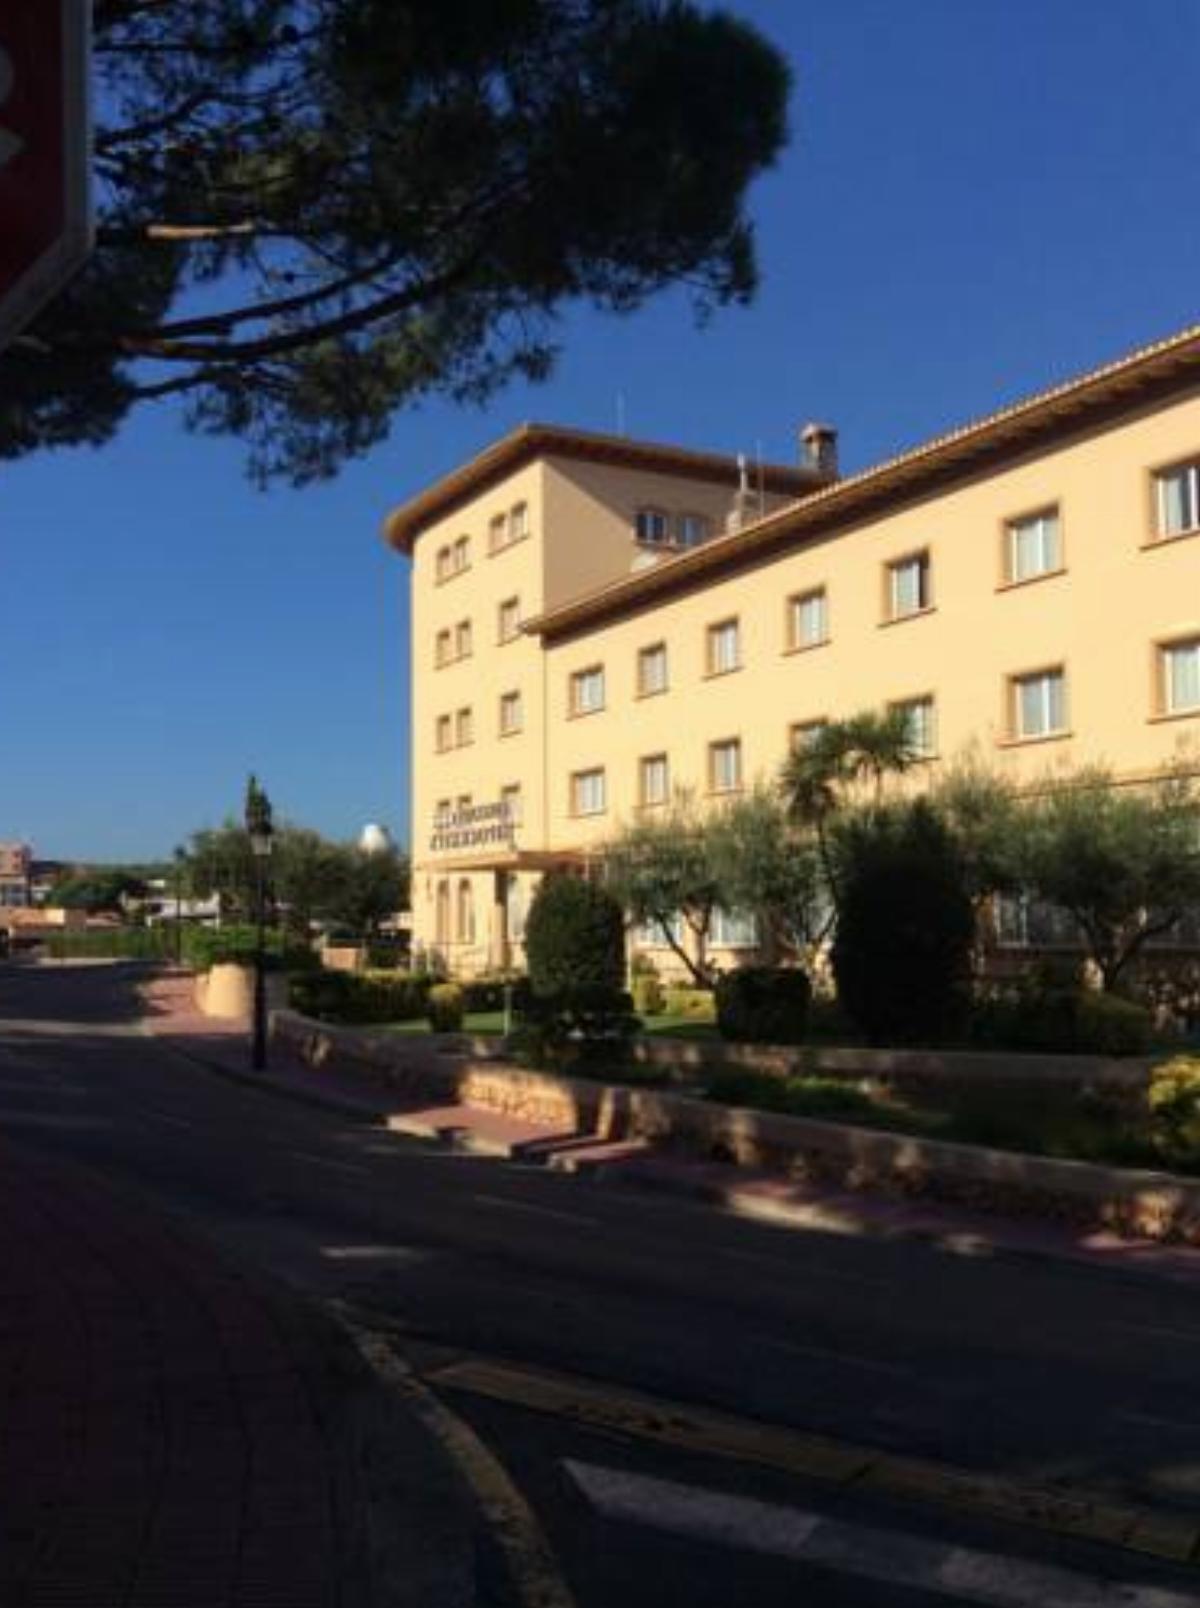 Hipocrates Curhotel Hotel Sant Feliu de Guixols Spain